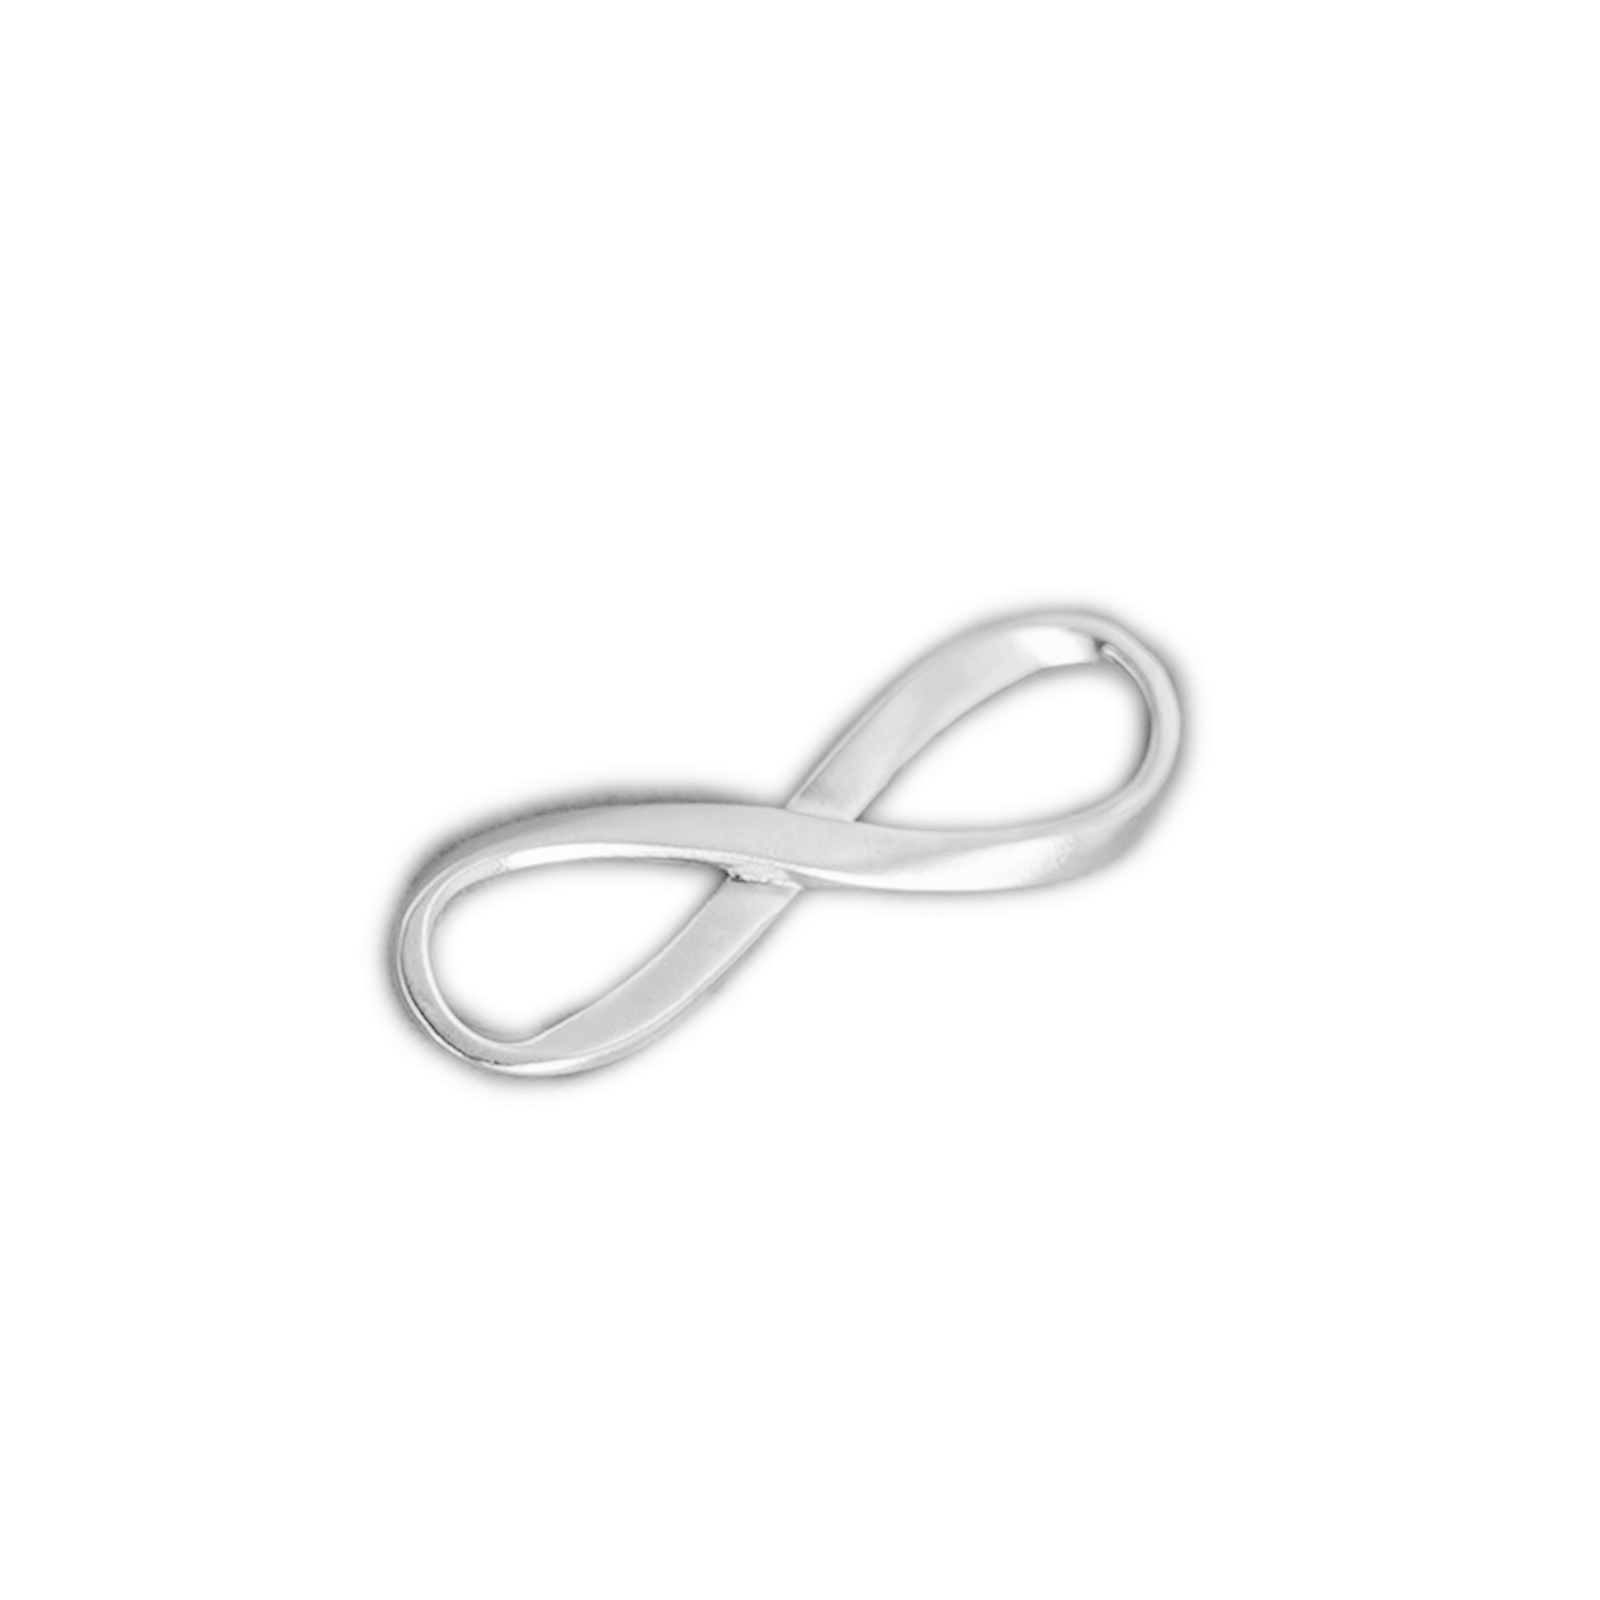 Sterling Silver Infinity Charm Infinite Love Necklace Bracelet Connector - sugarkittenlondon